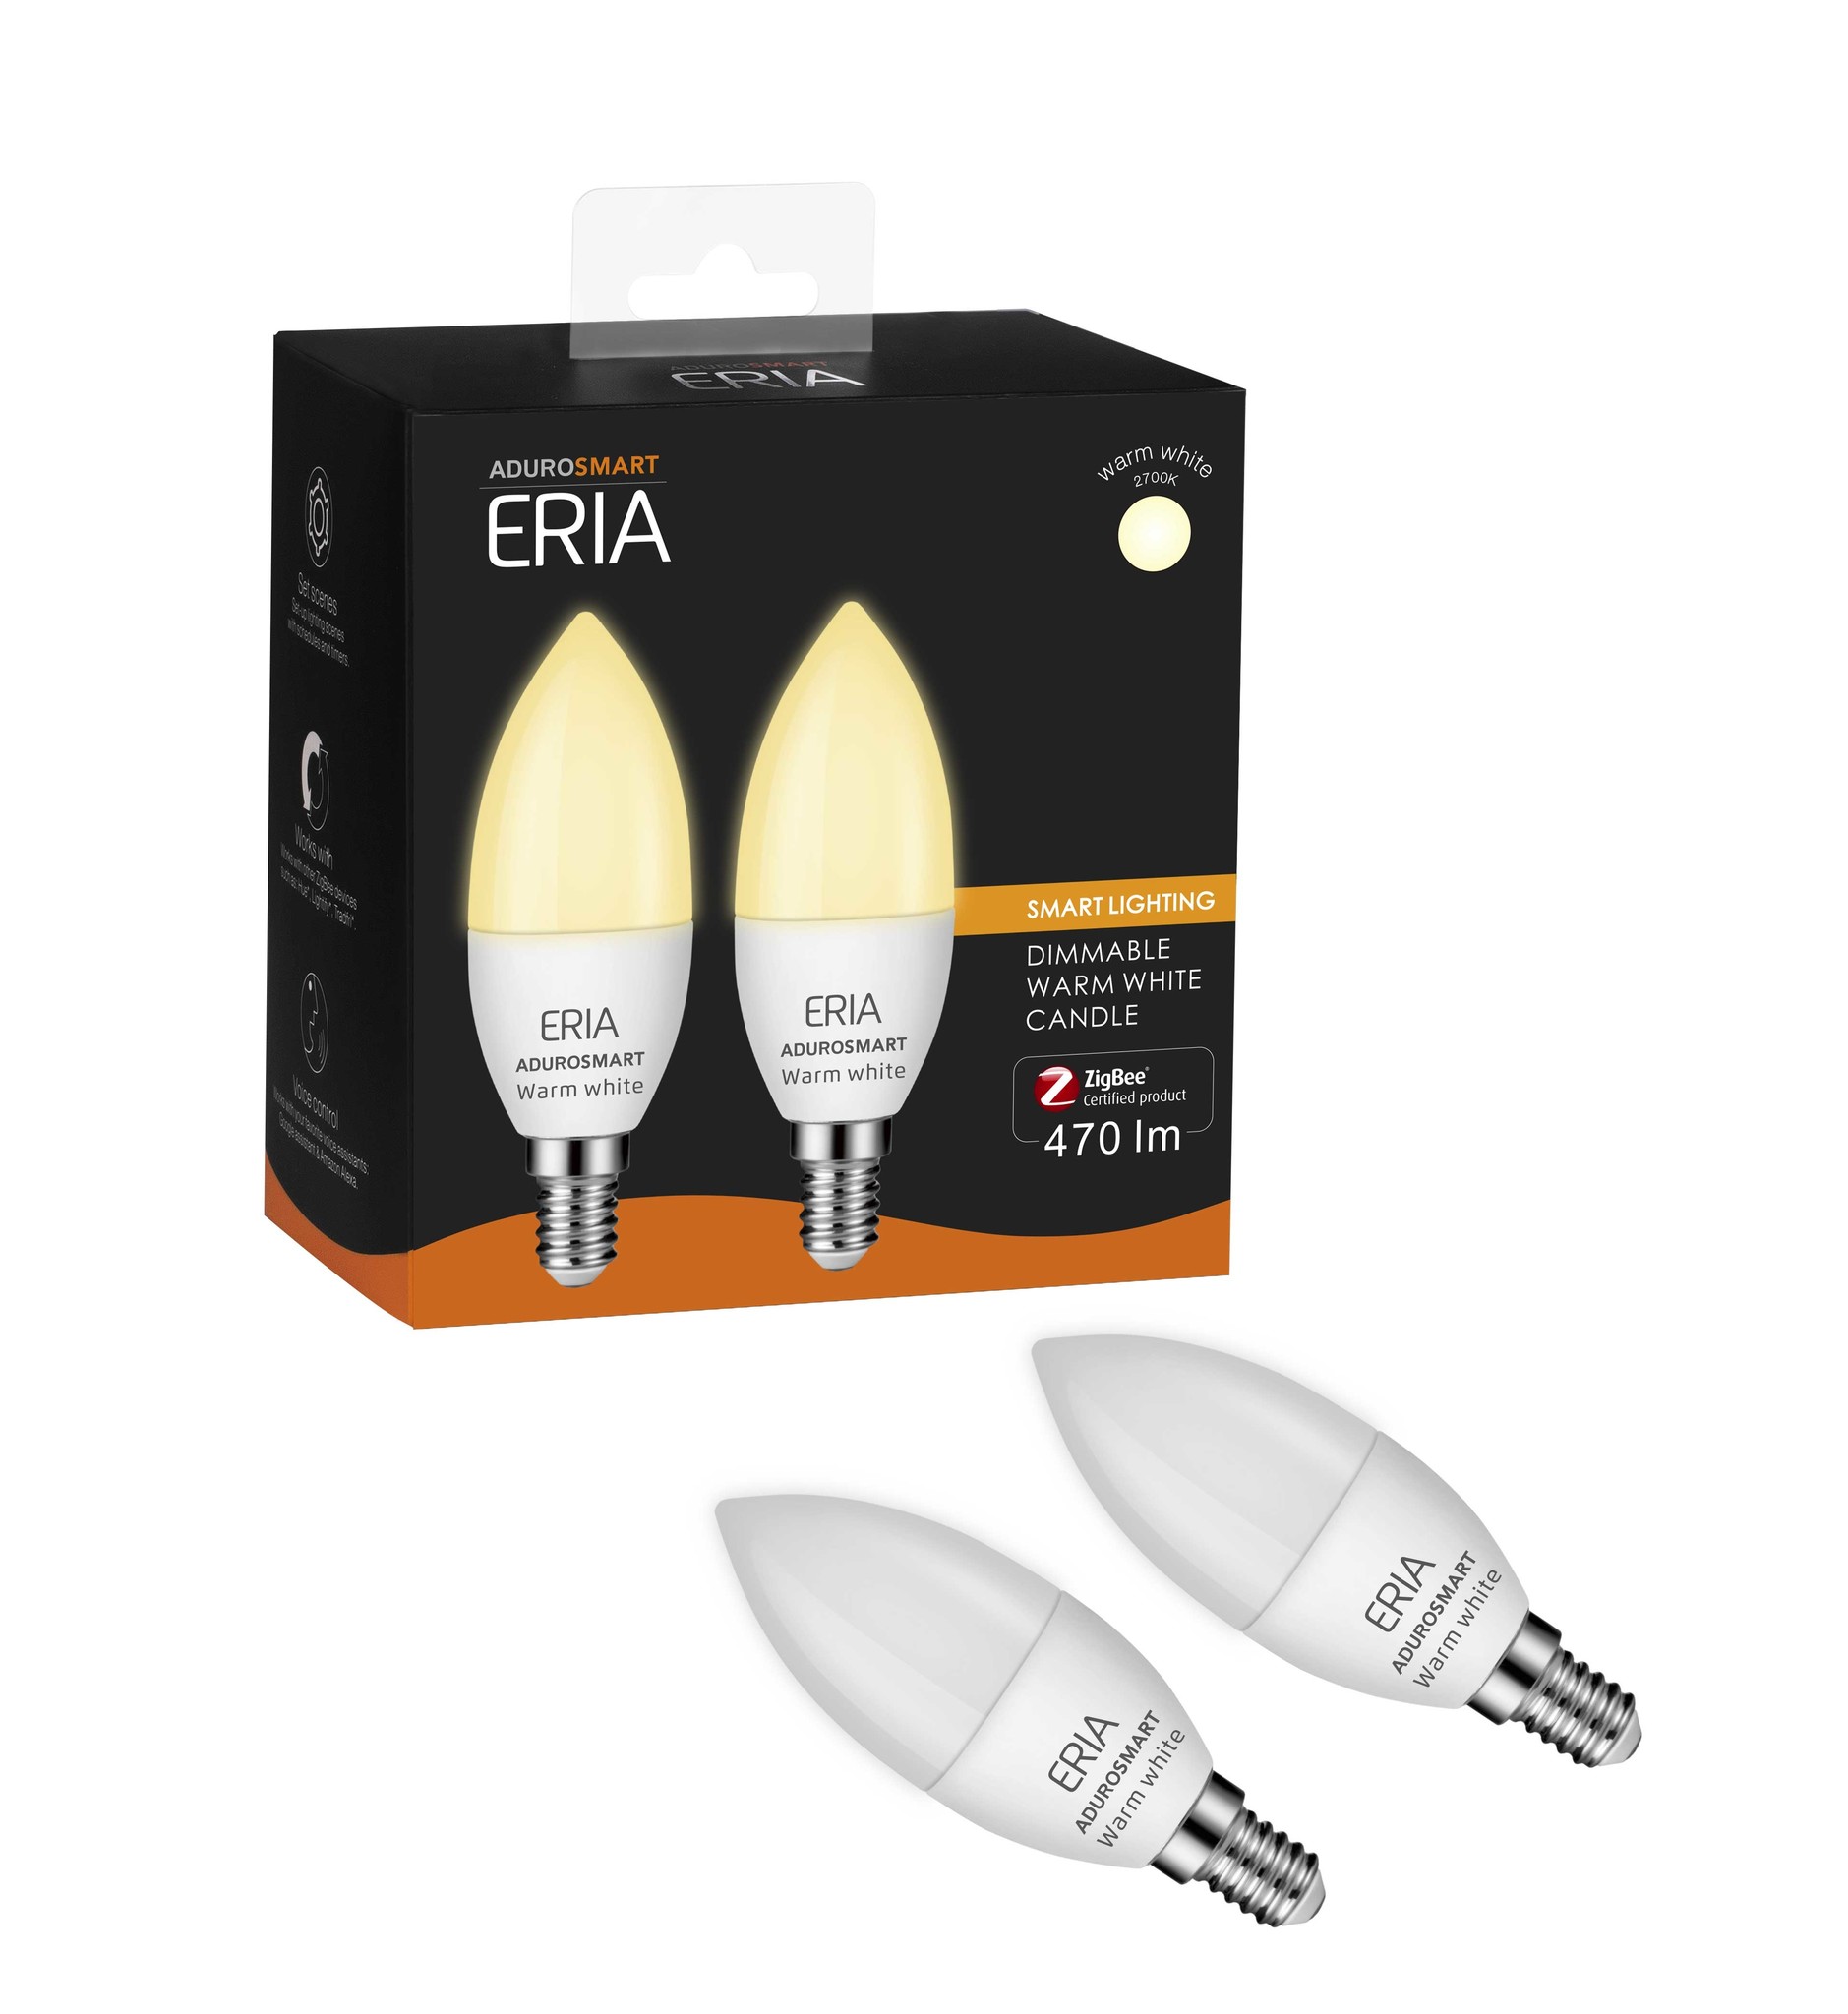 AduroSmart ERIA® E14 kaars Warm white - 2-pack - 2700K - warm wit licht - Zigbee Smart Lamp - werkt met o.a. Adurosmart, Hue en Google Home